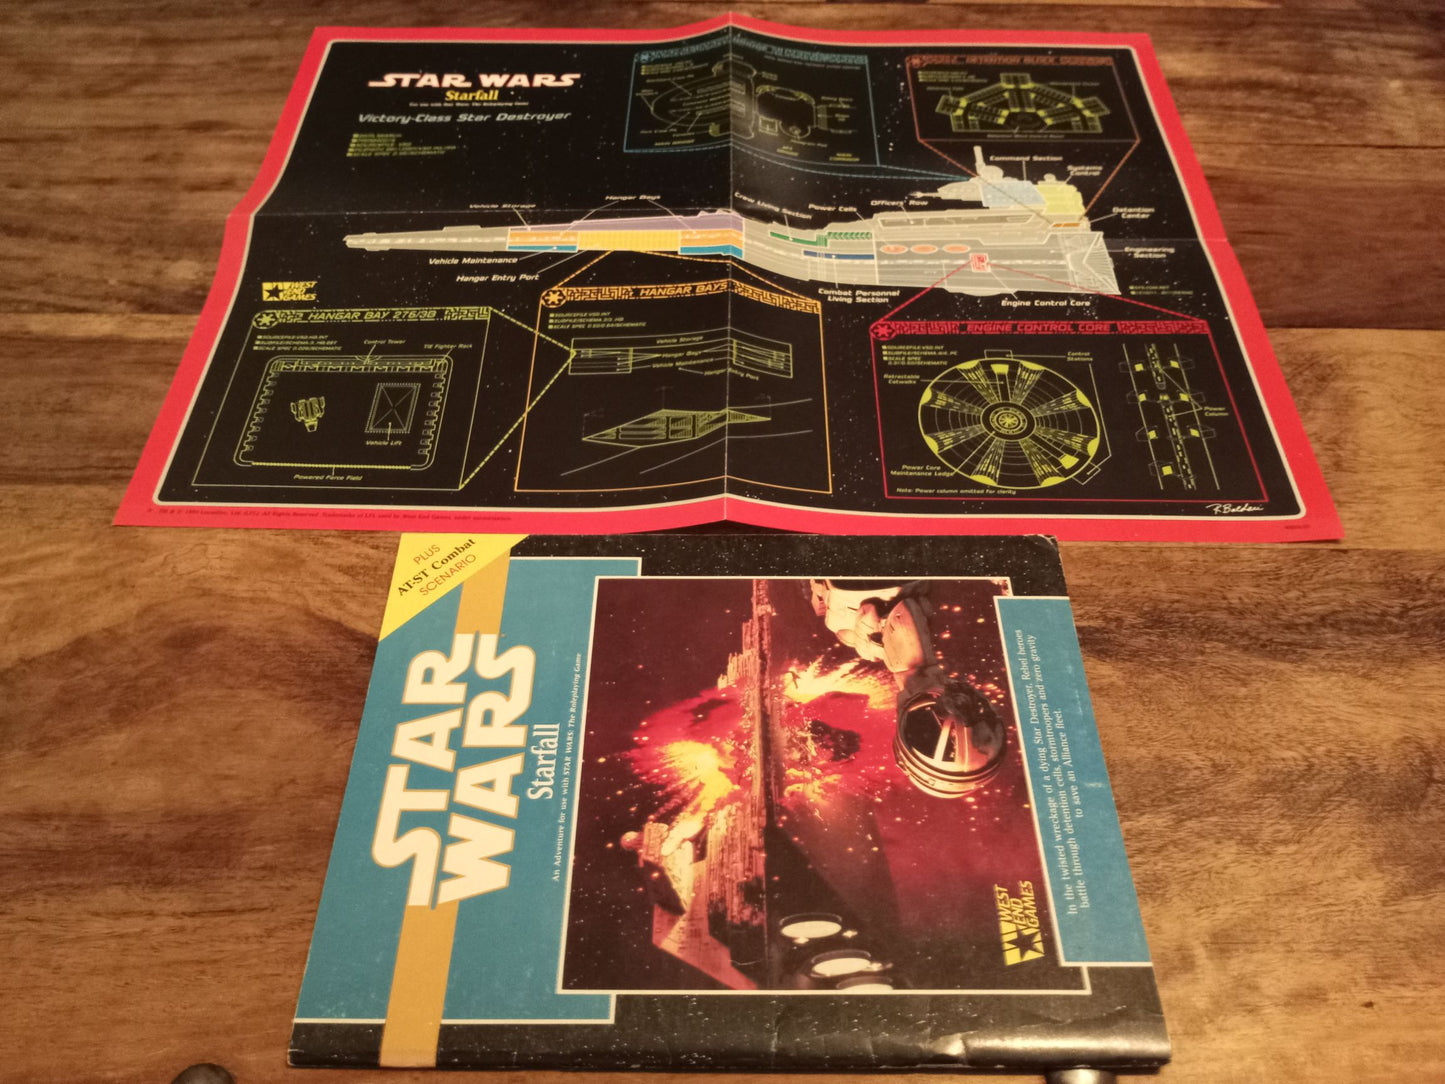 Star Wars Starfall West End Games 1989